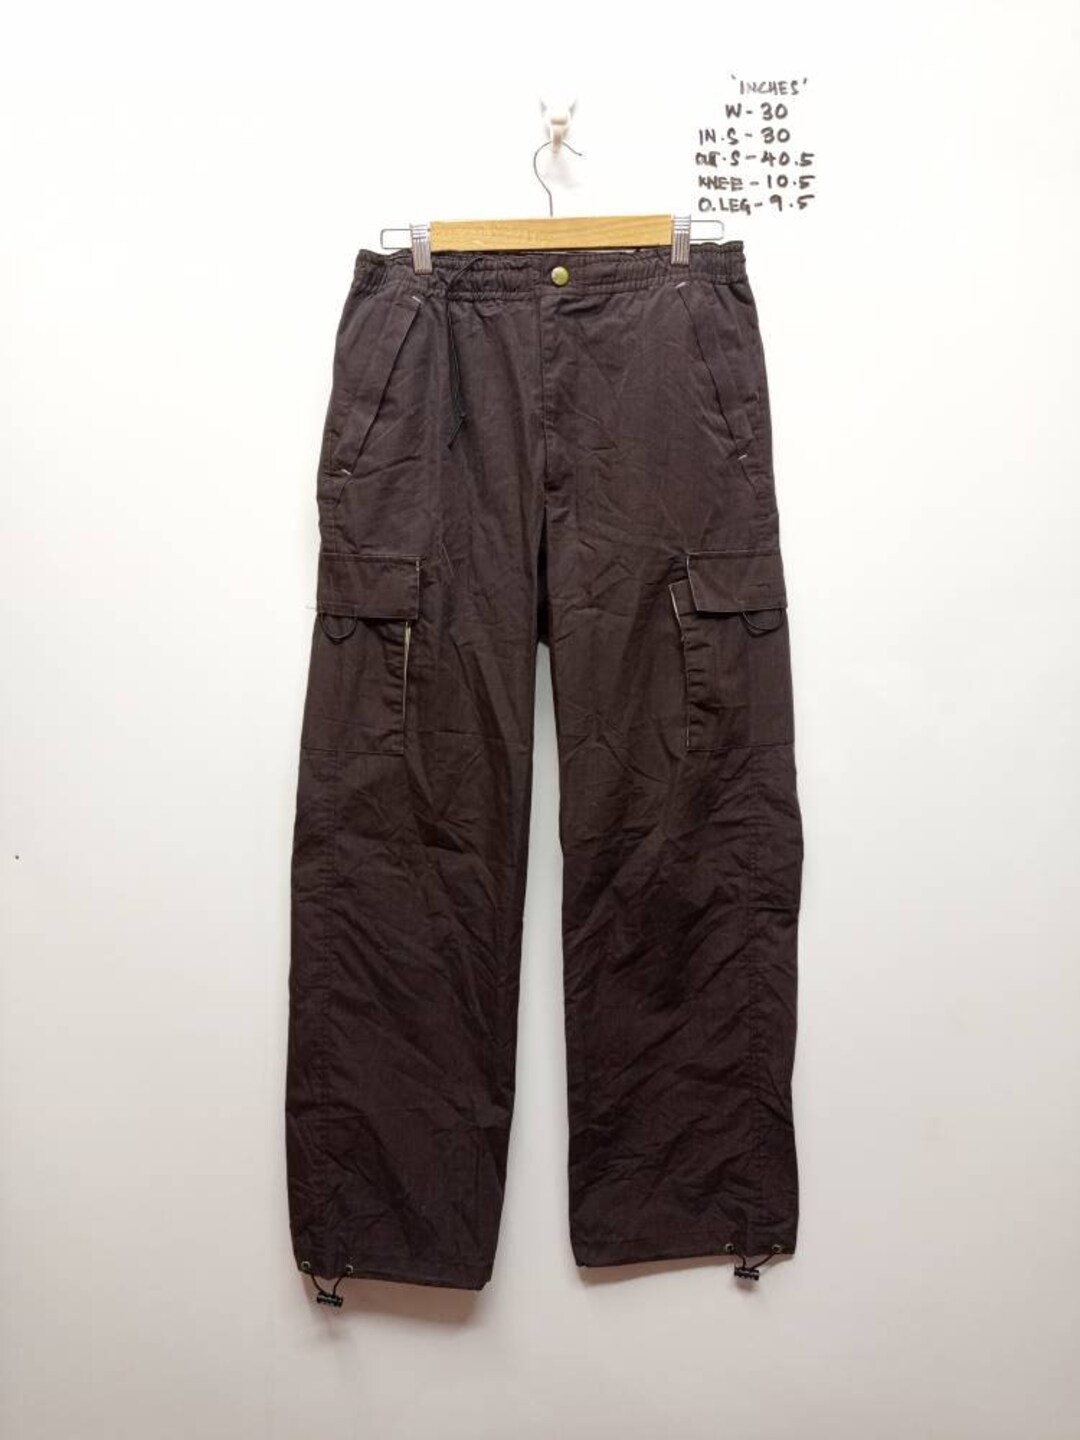 Vintage Boycott Japan Straight Cut Stripes Denim Jeans Japan - Etsy